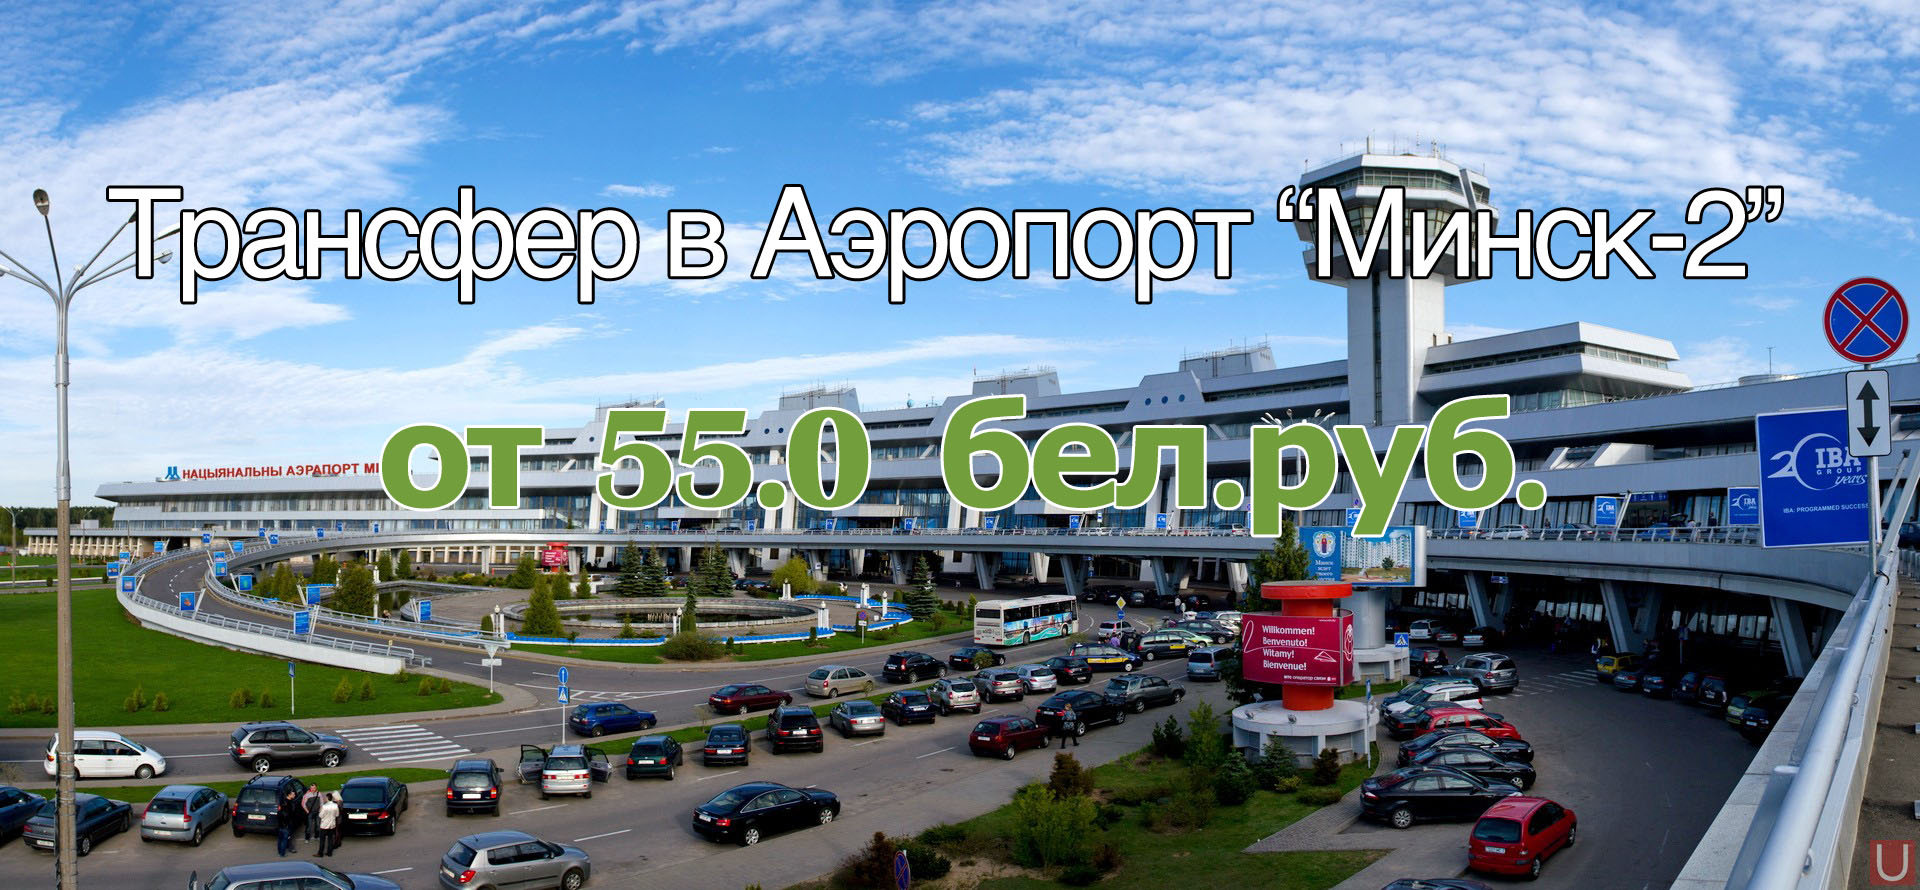 Трансфер в аэропорт Минск от 34.90 руб.!